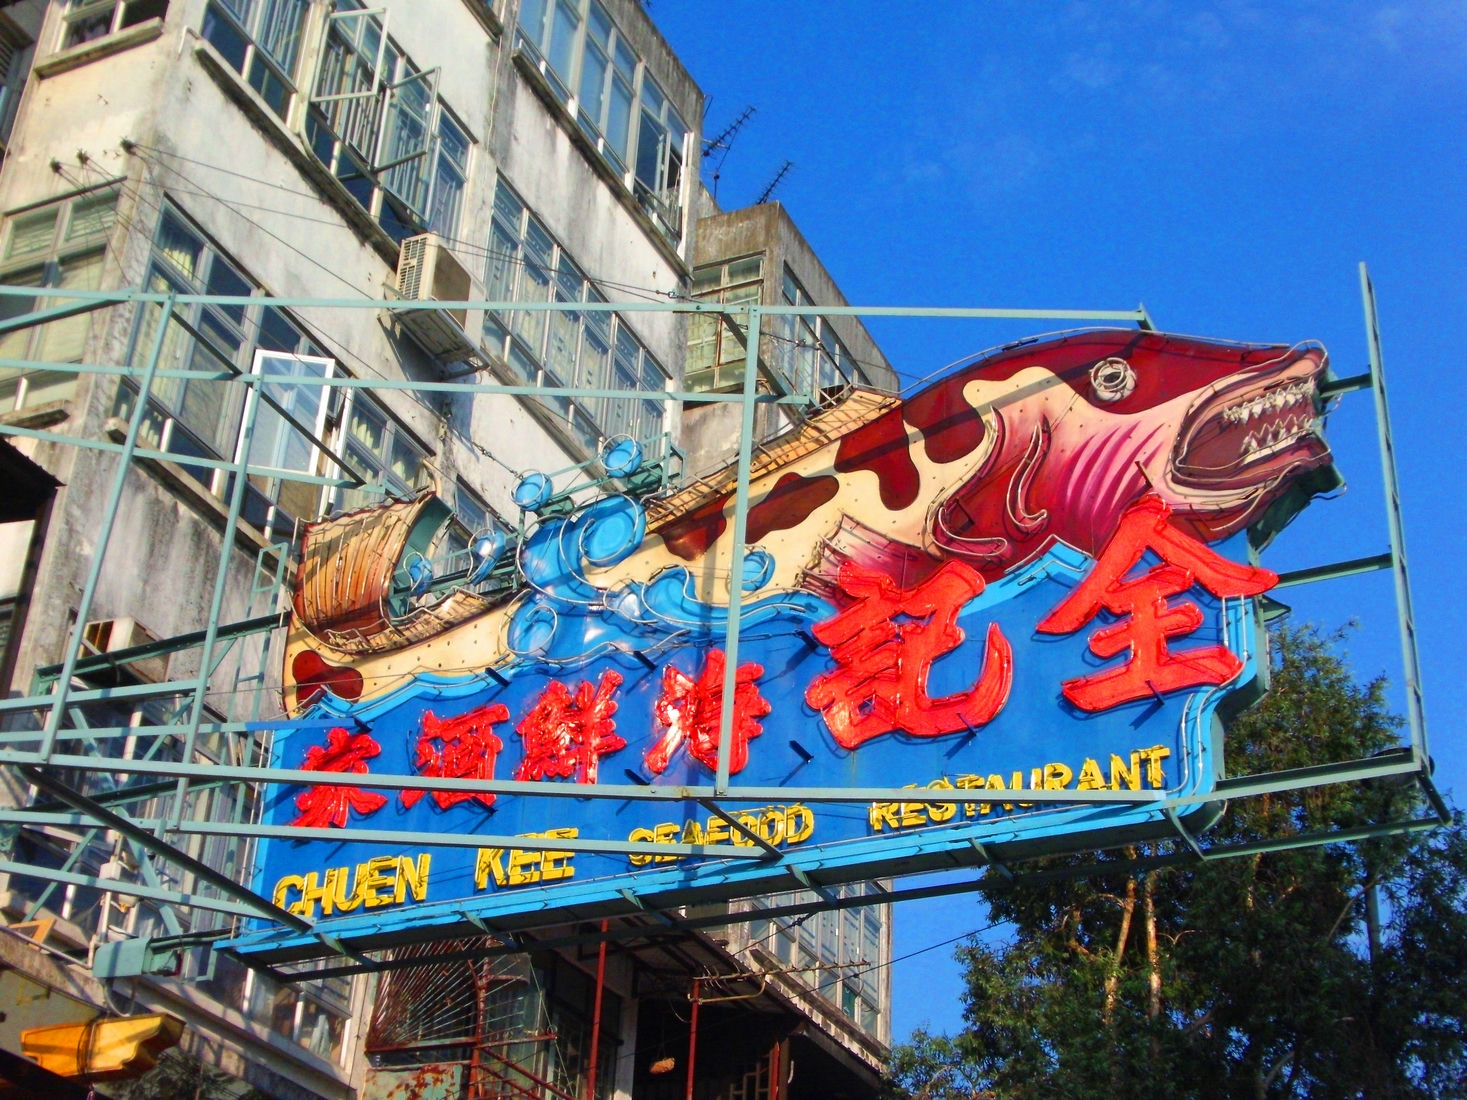 Sai Kung seafood restaurant neon sign